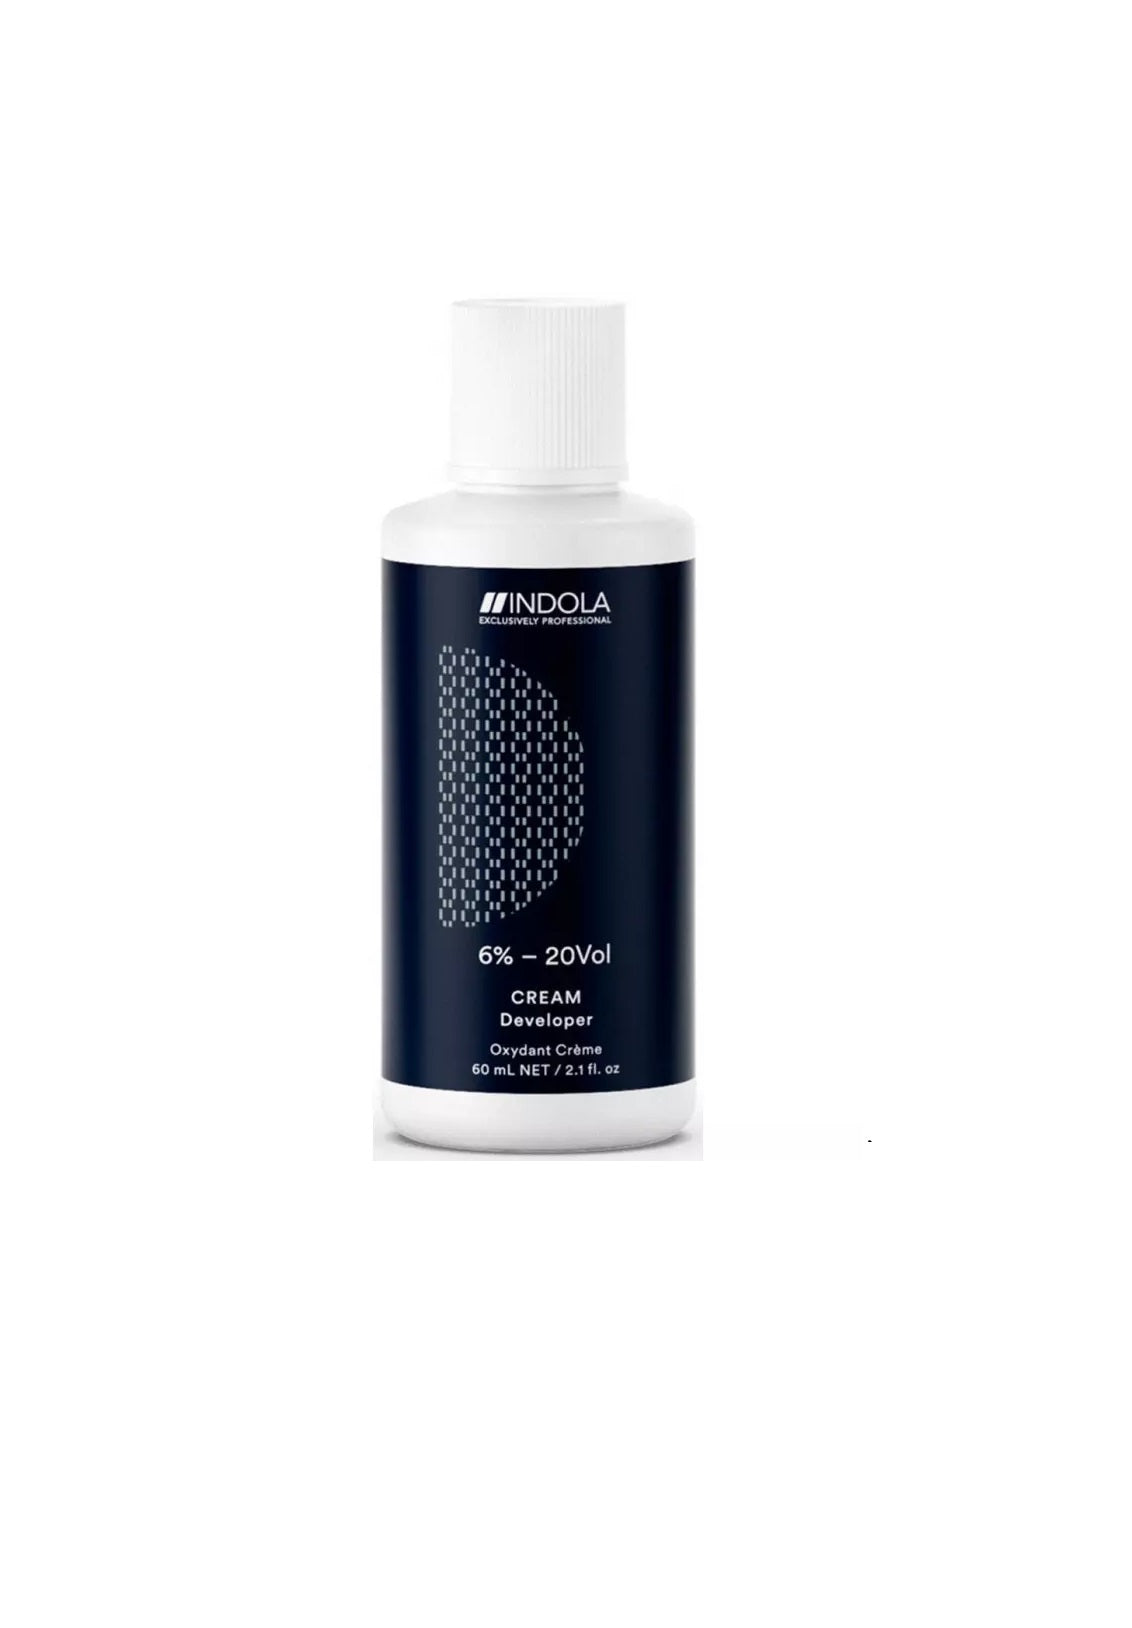 Cream Developer Crema Oxidanta Vol pentru vopsea de par cu amoniac Indola Blond Expert 6% 20vol 60ml